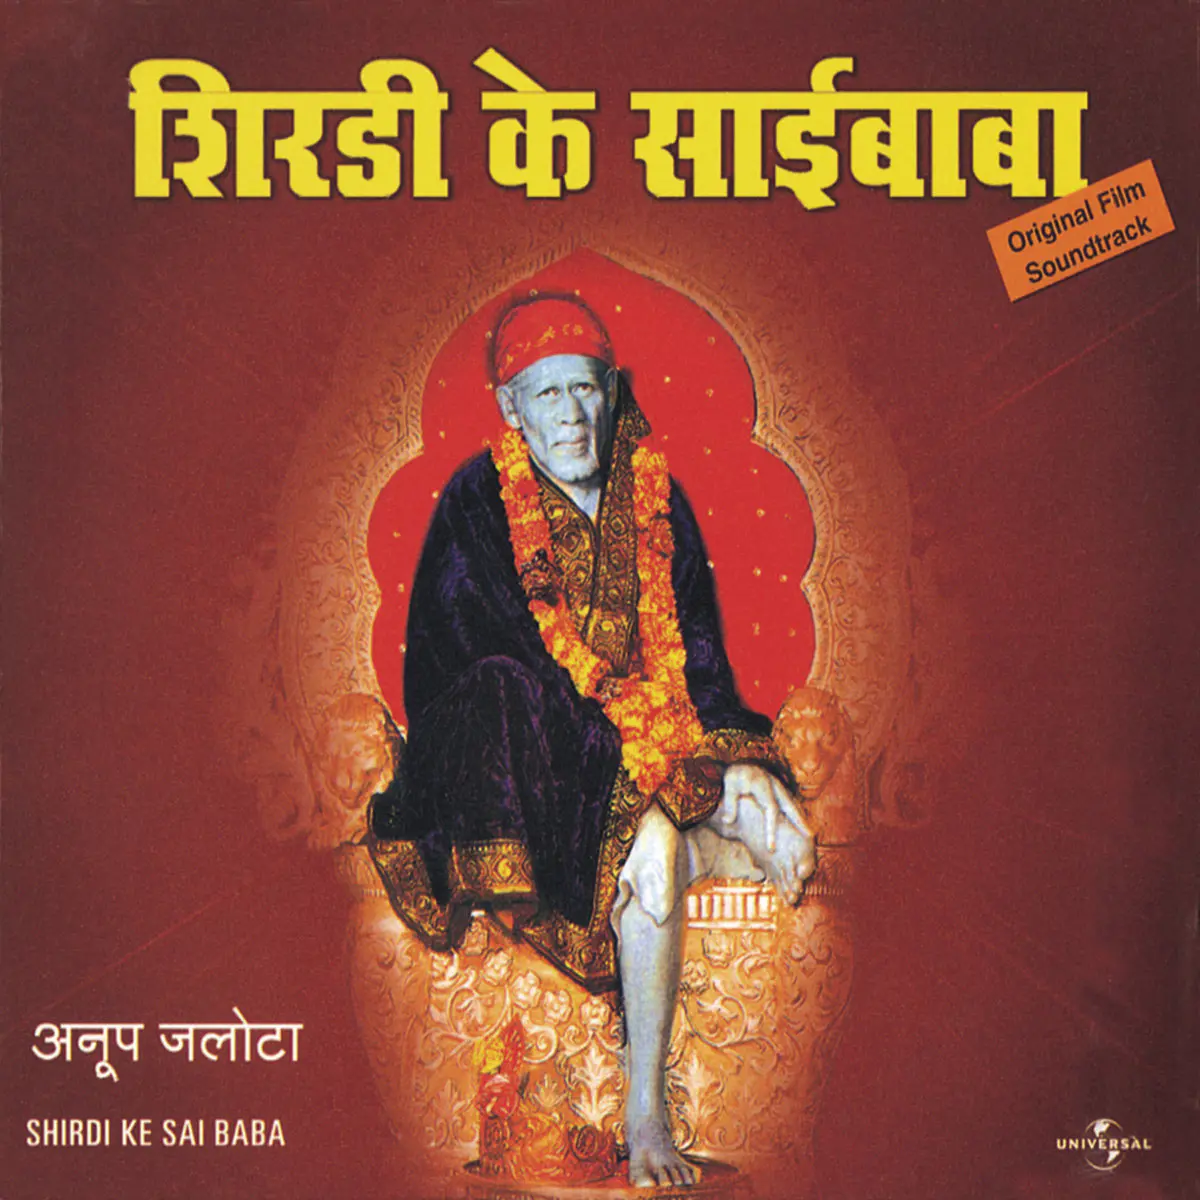 Sainath Tere Hazaron Haath Lyrics In Hindi Shirdi Ke Sai Baba Sainath Tere Hazaron Haath Song Lyrics In English Free Online On Gaana Com Tu hi fakeer, tu hi hai raja tu hi hai sai, tu hi hai baba sainath, sainath. sainath tere hazaron haath song lyrics